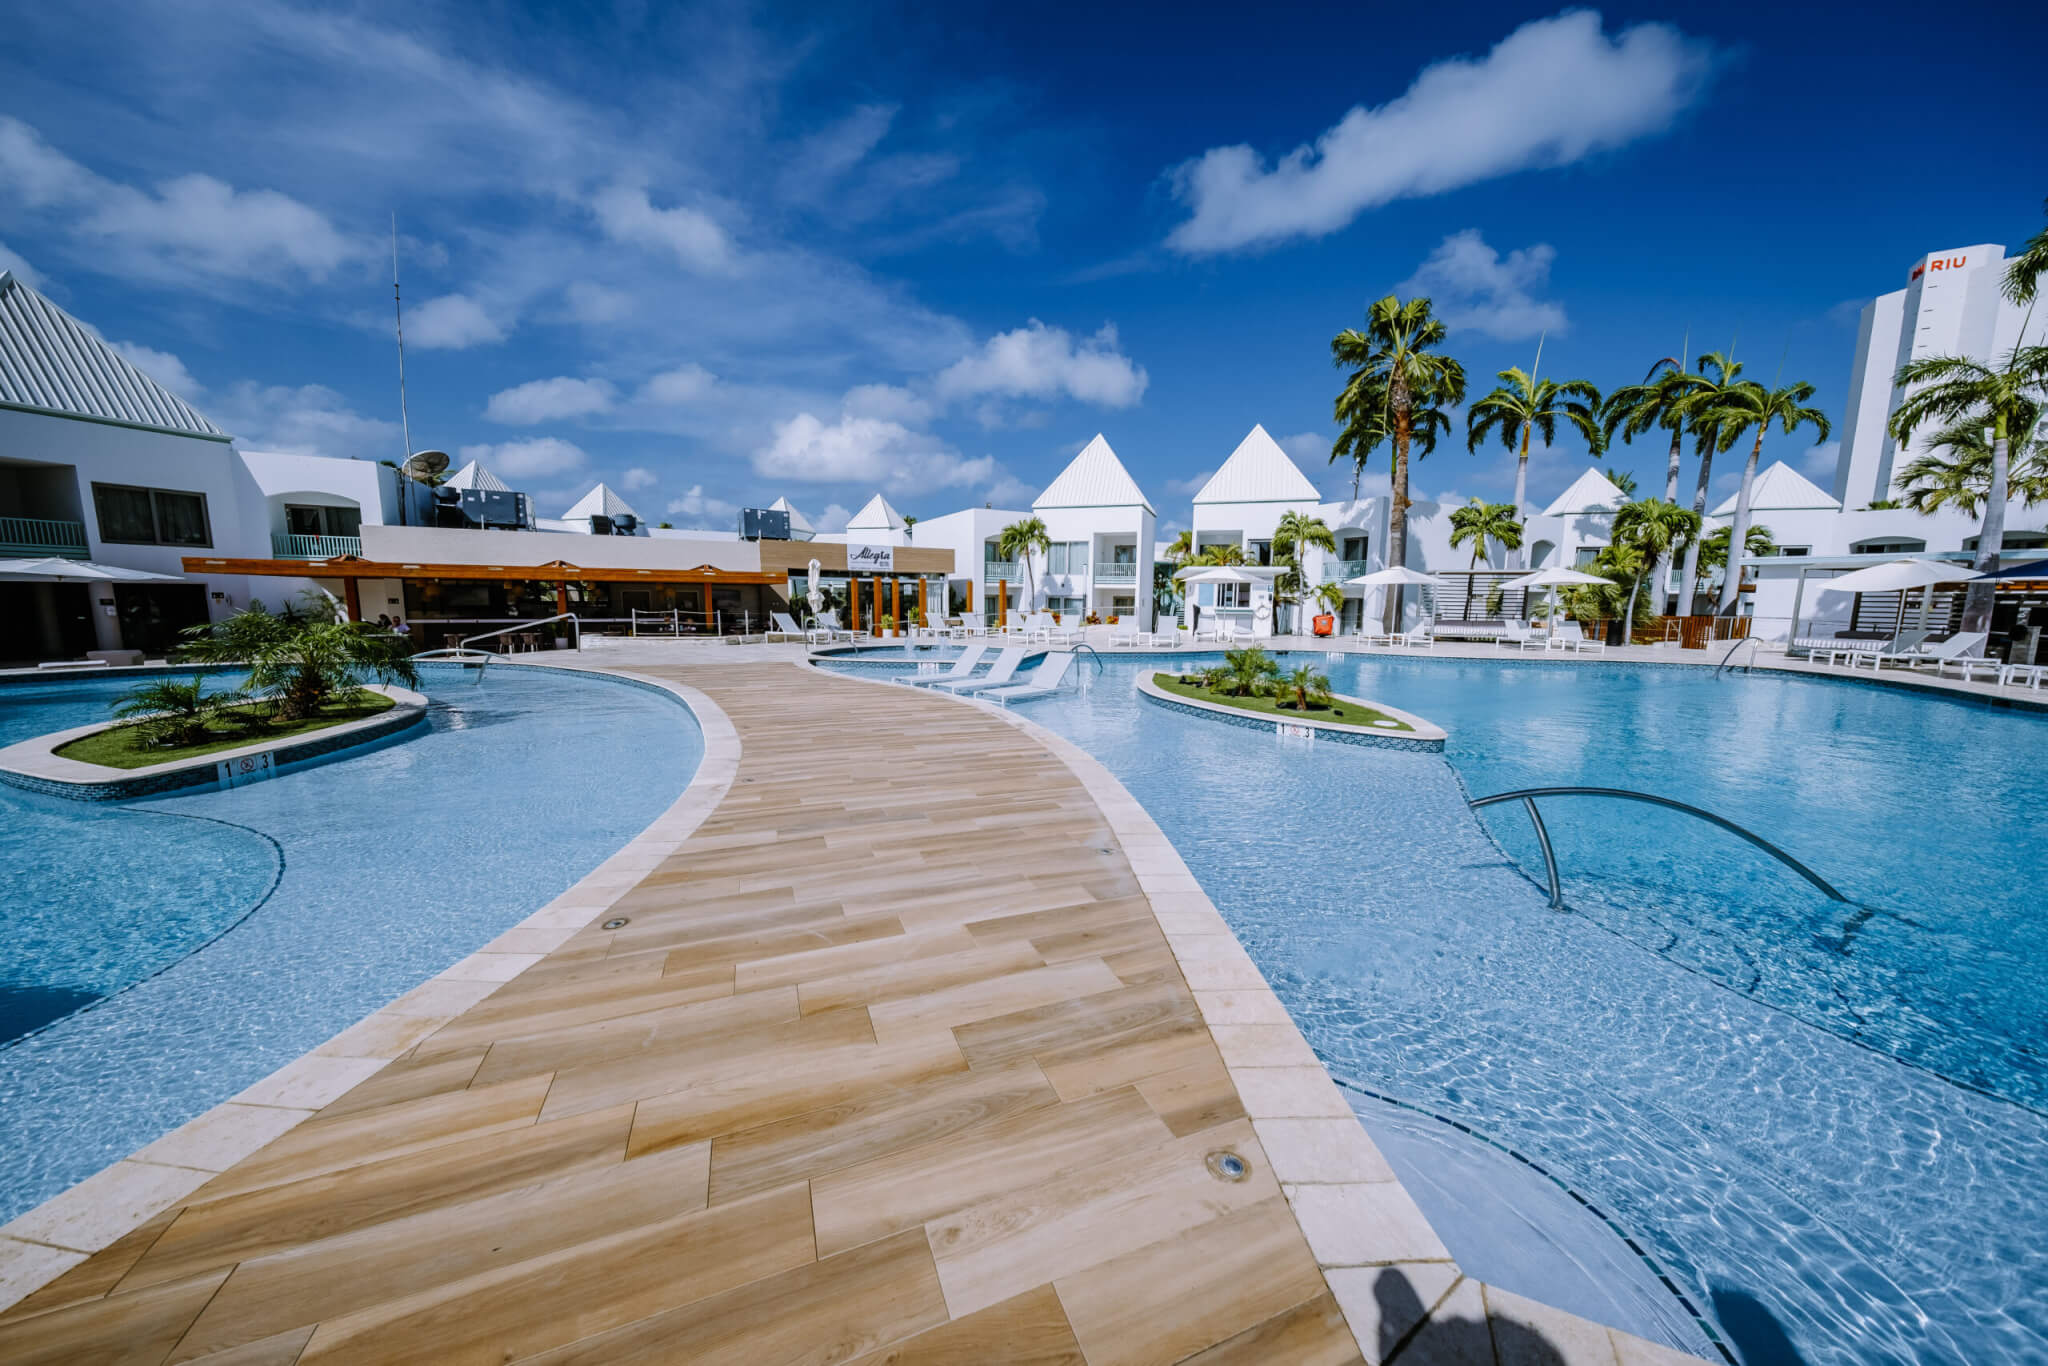 Luxury resort with swimming pool near Palm Beach Aruba Caribbean